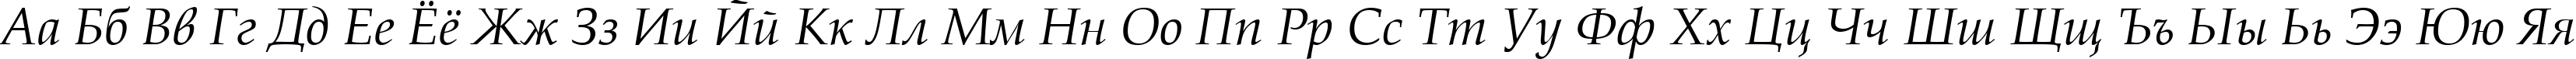 Пример написания русского алфавита шрифтом Book Antiqua Italic